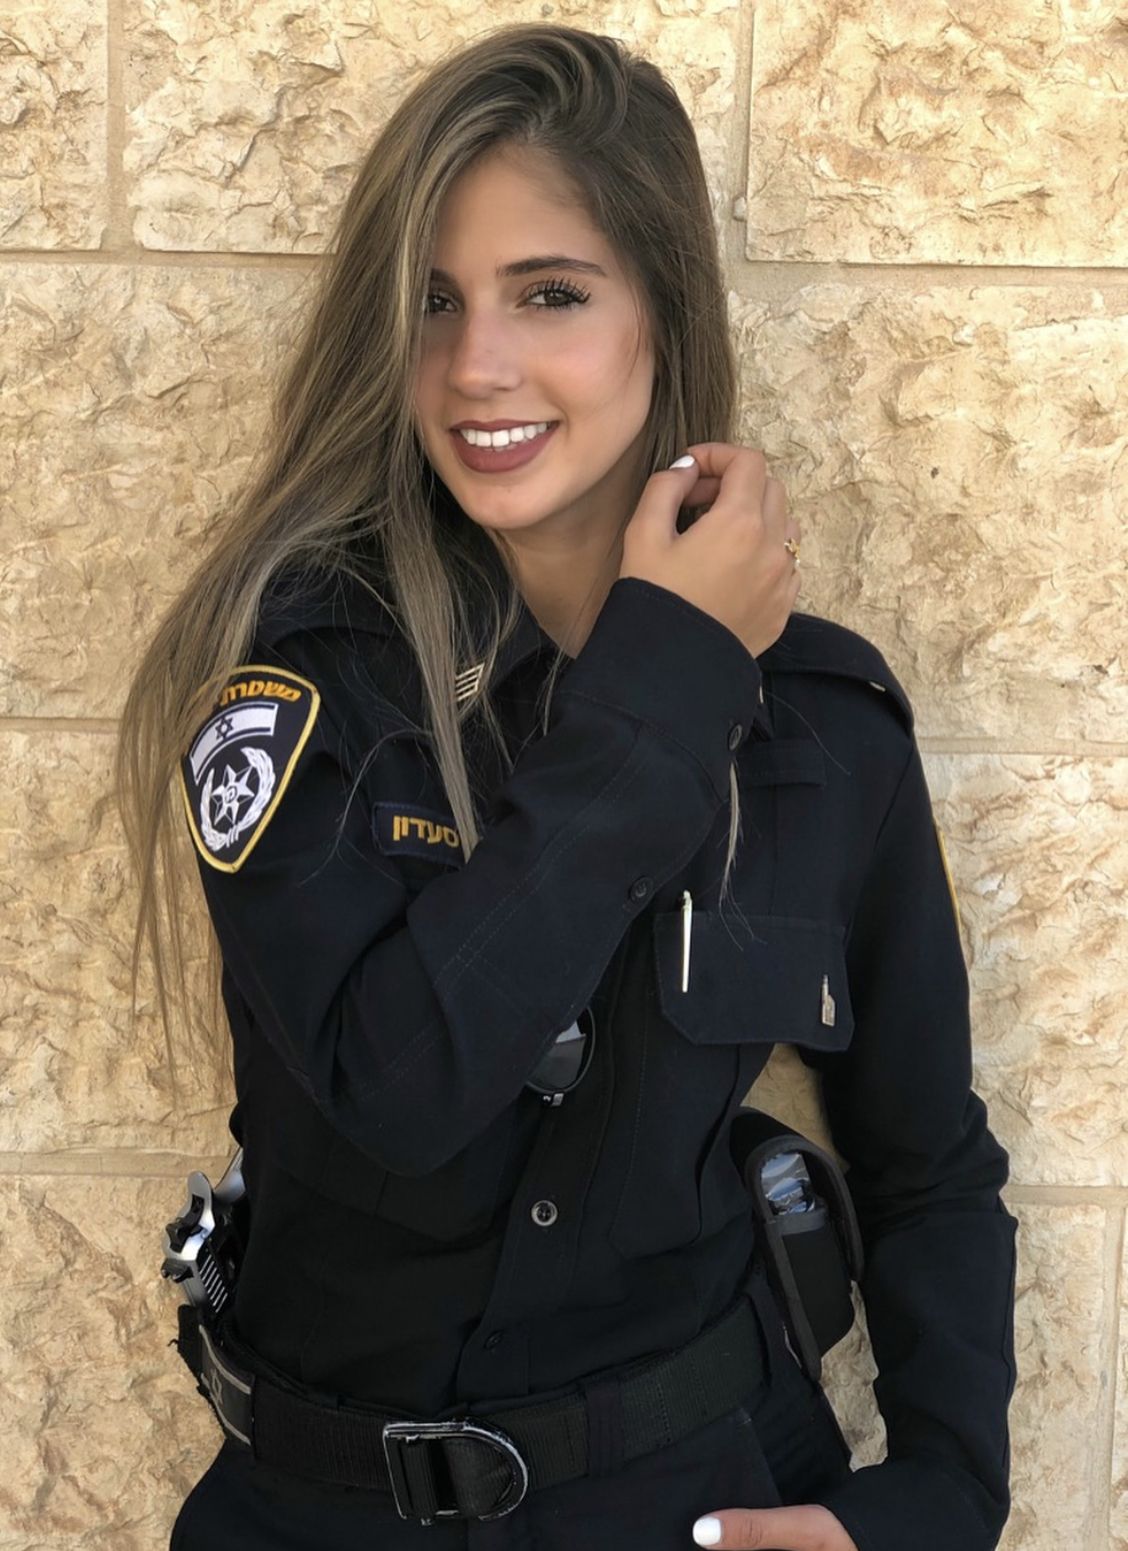 Cop woman